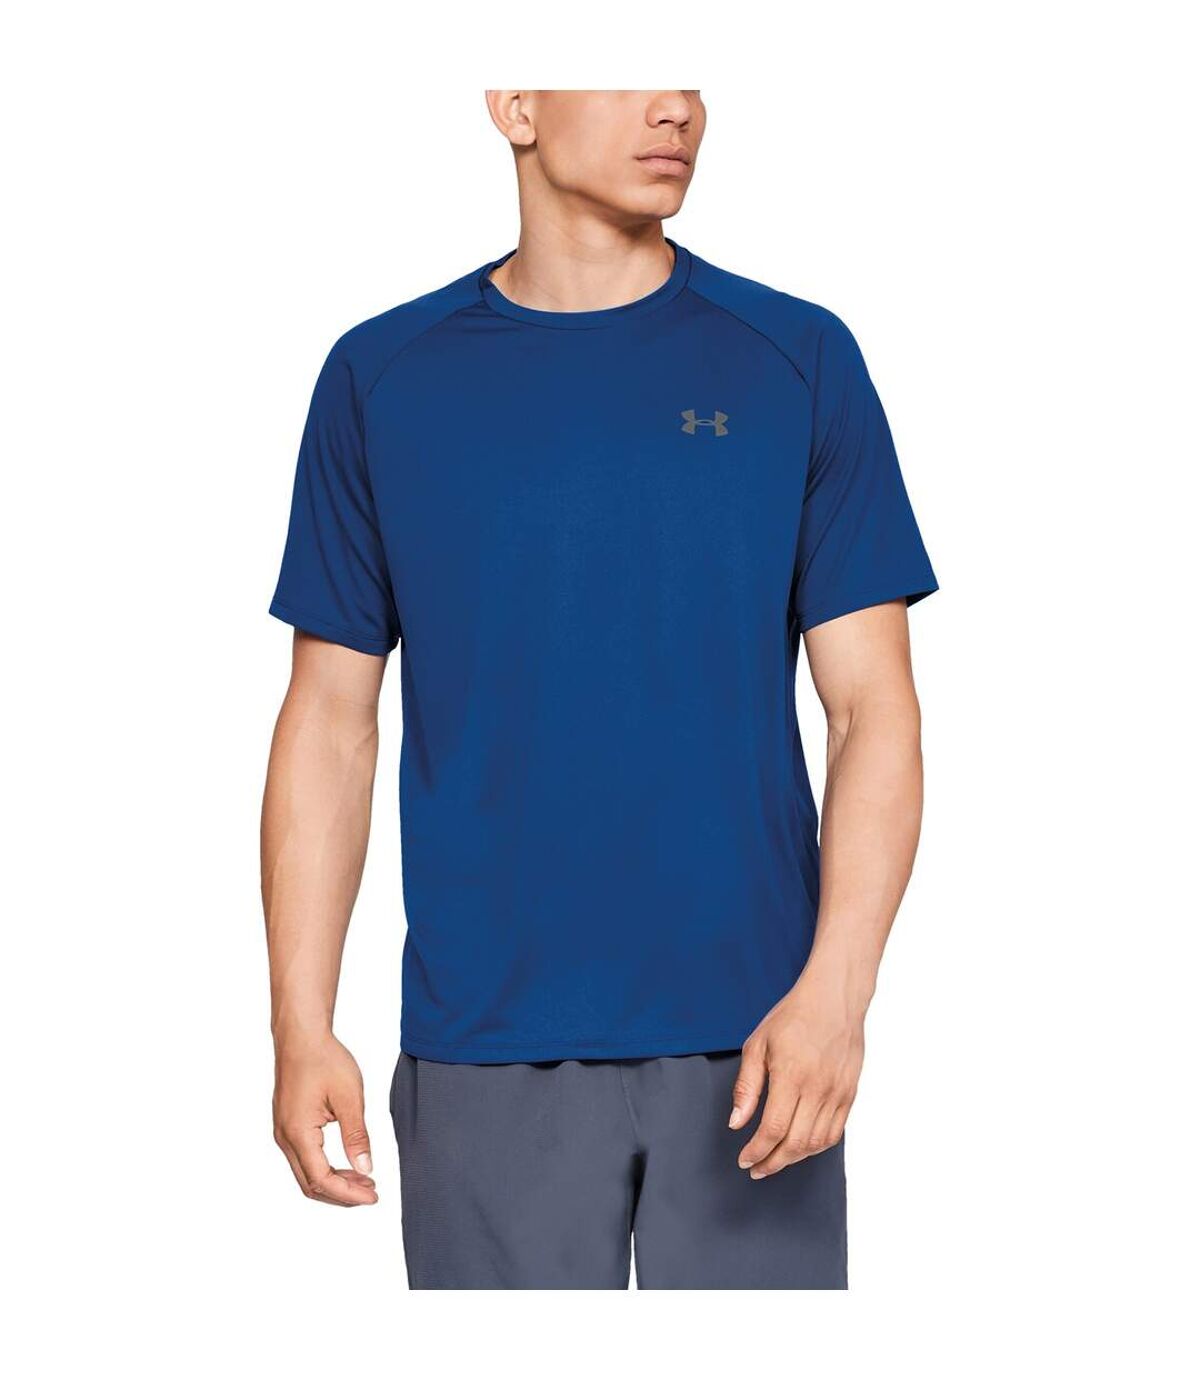 Under Armour Mens Tech T-Shirt (Royal Blue/Graphite) - UTRW7749